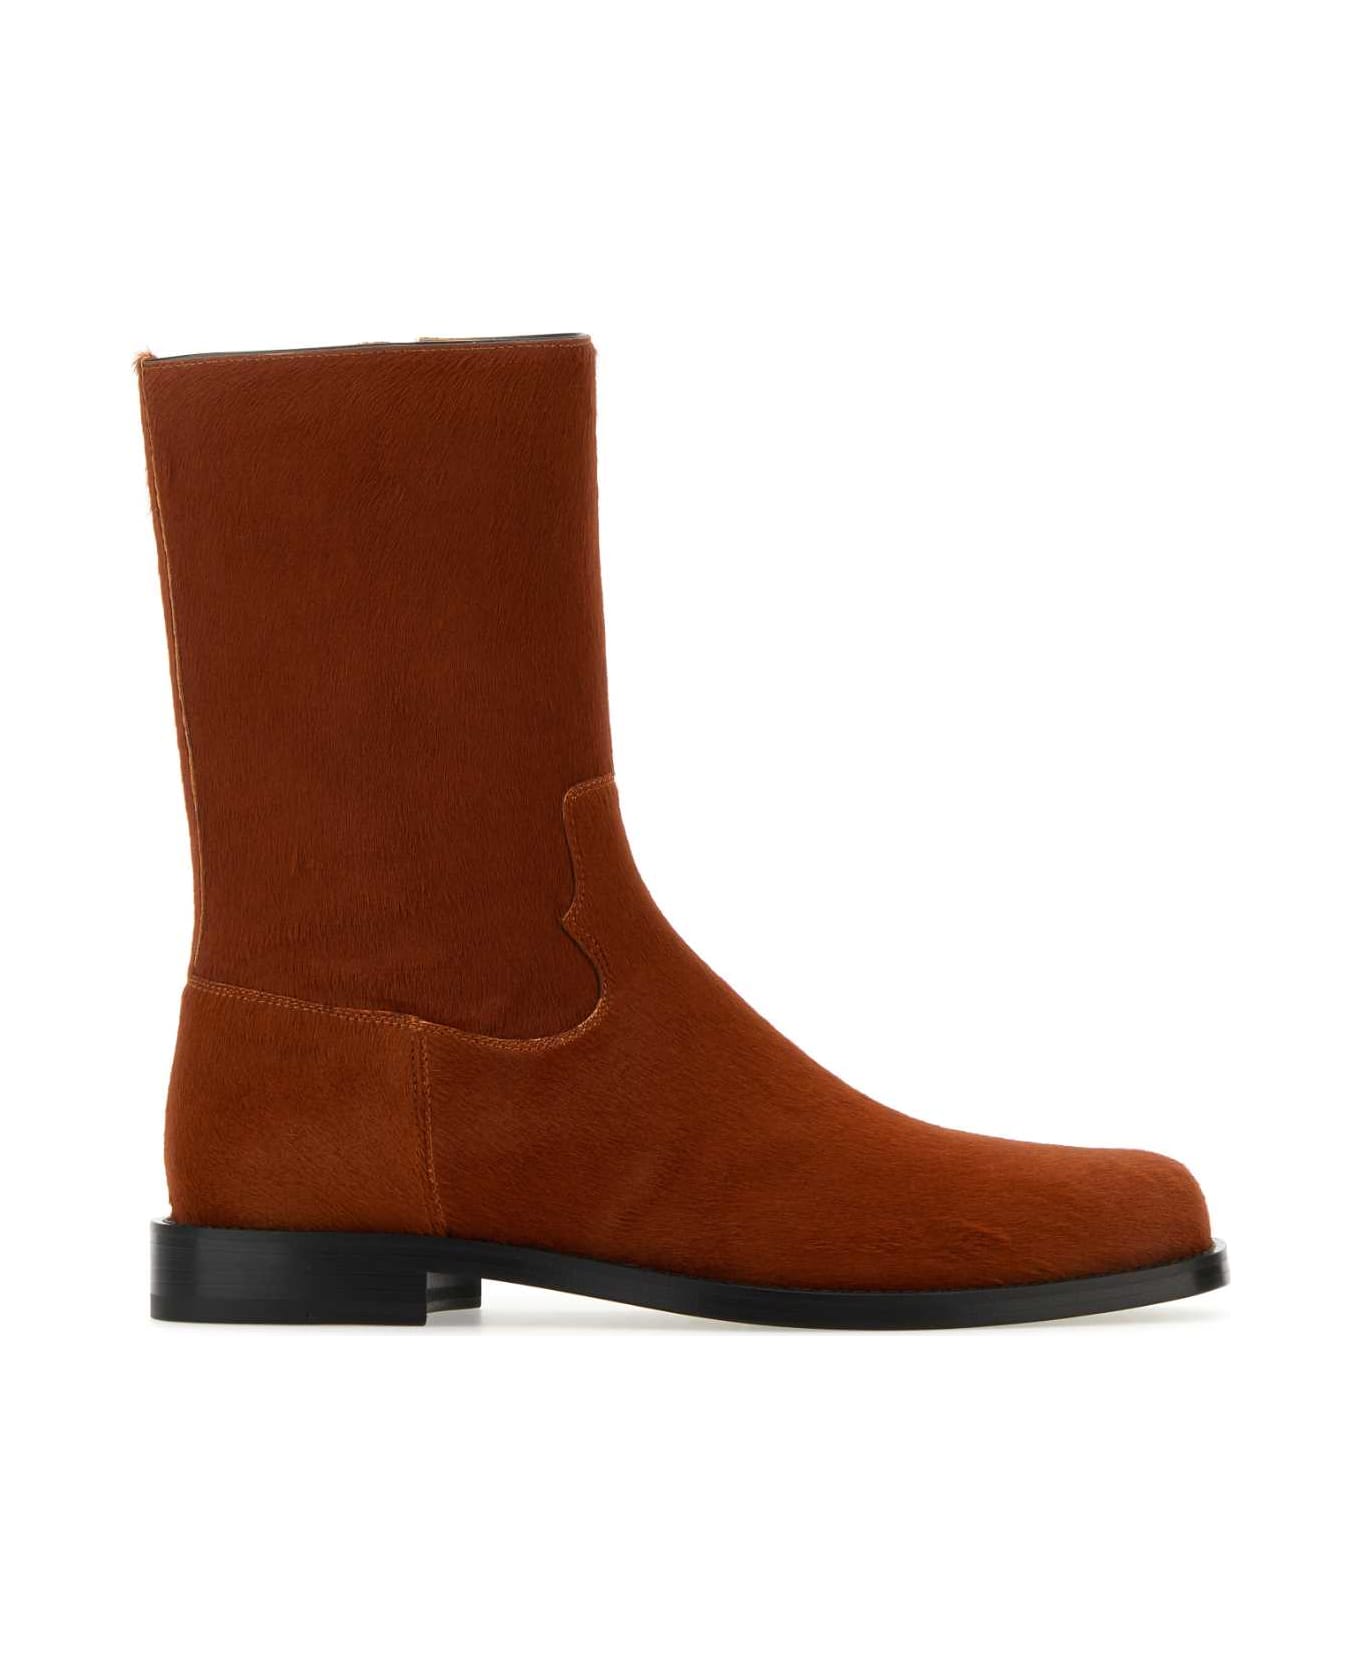 Dries Van Noten Brick Calfhair Ankle Boots - TAN ブーツ